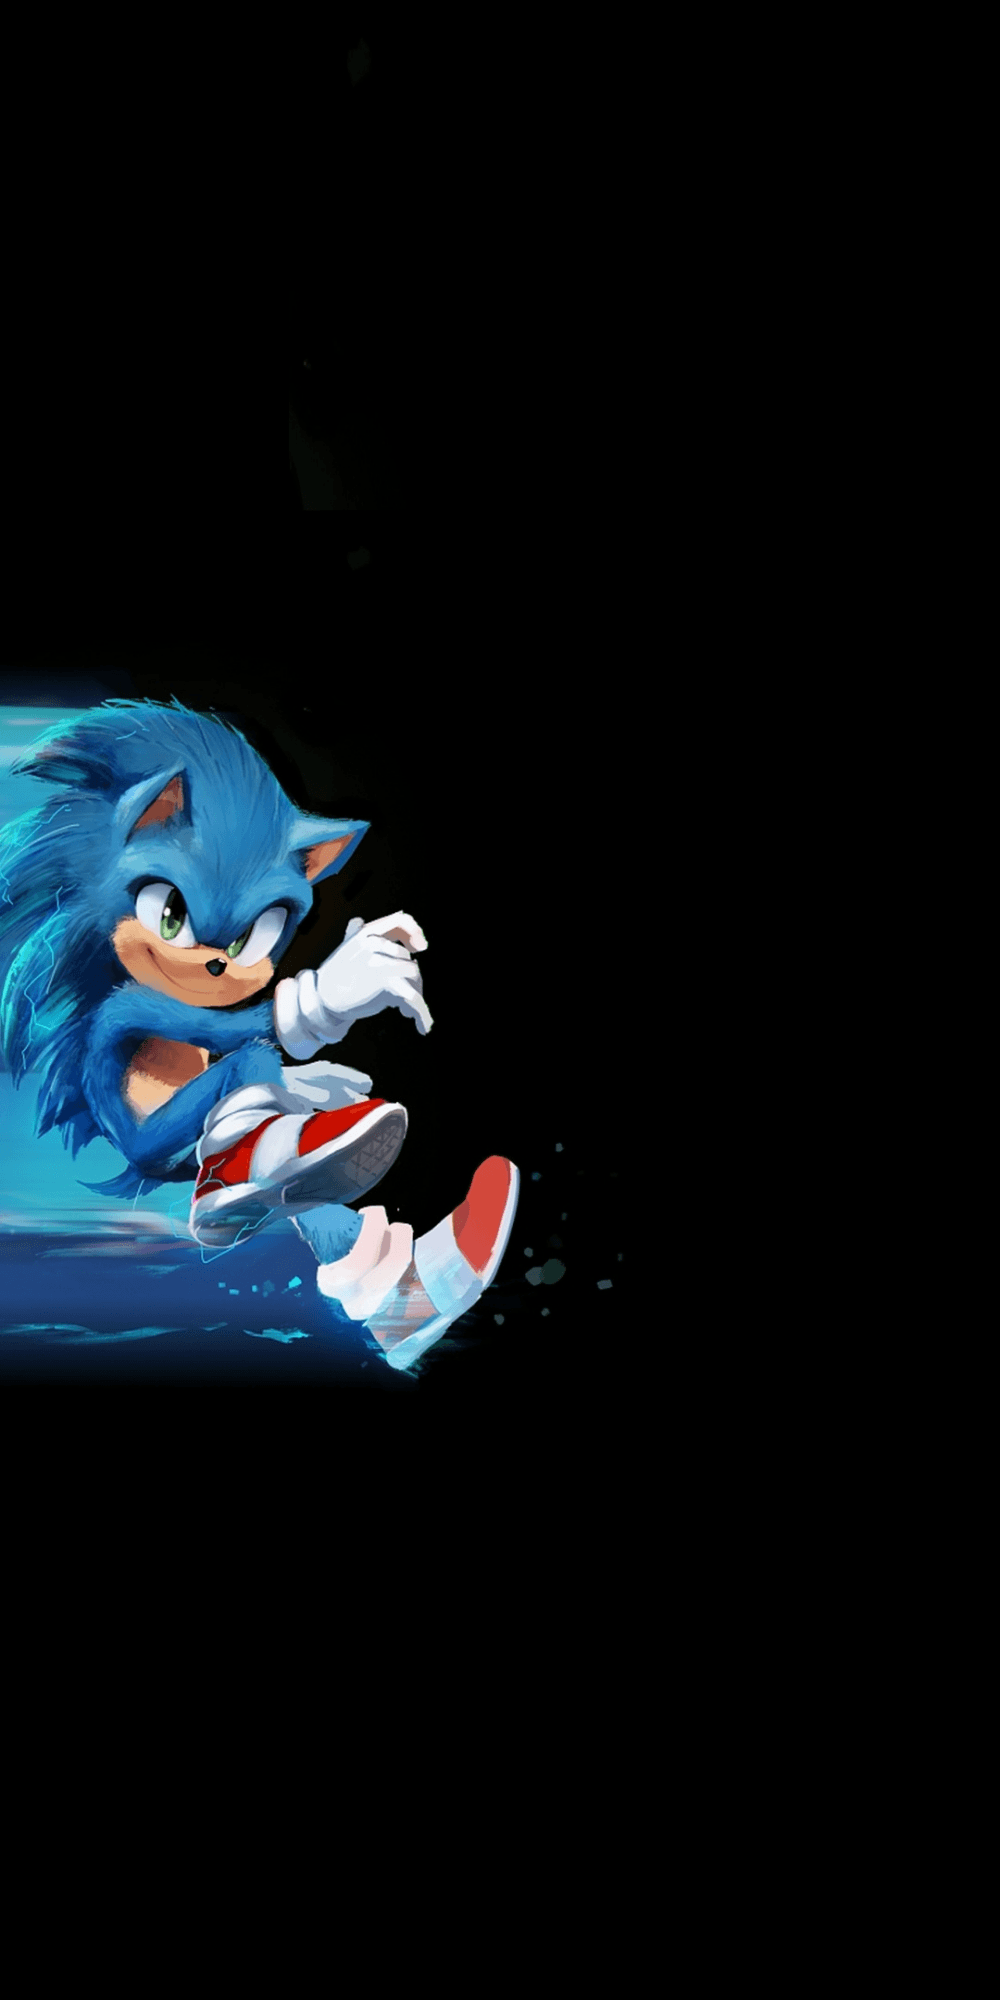 Sonic the Hedgehog, 2020 movie, art wallpaper in 2020